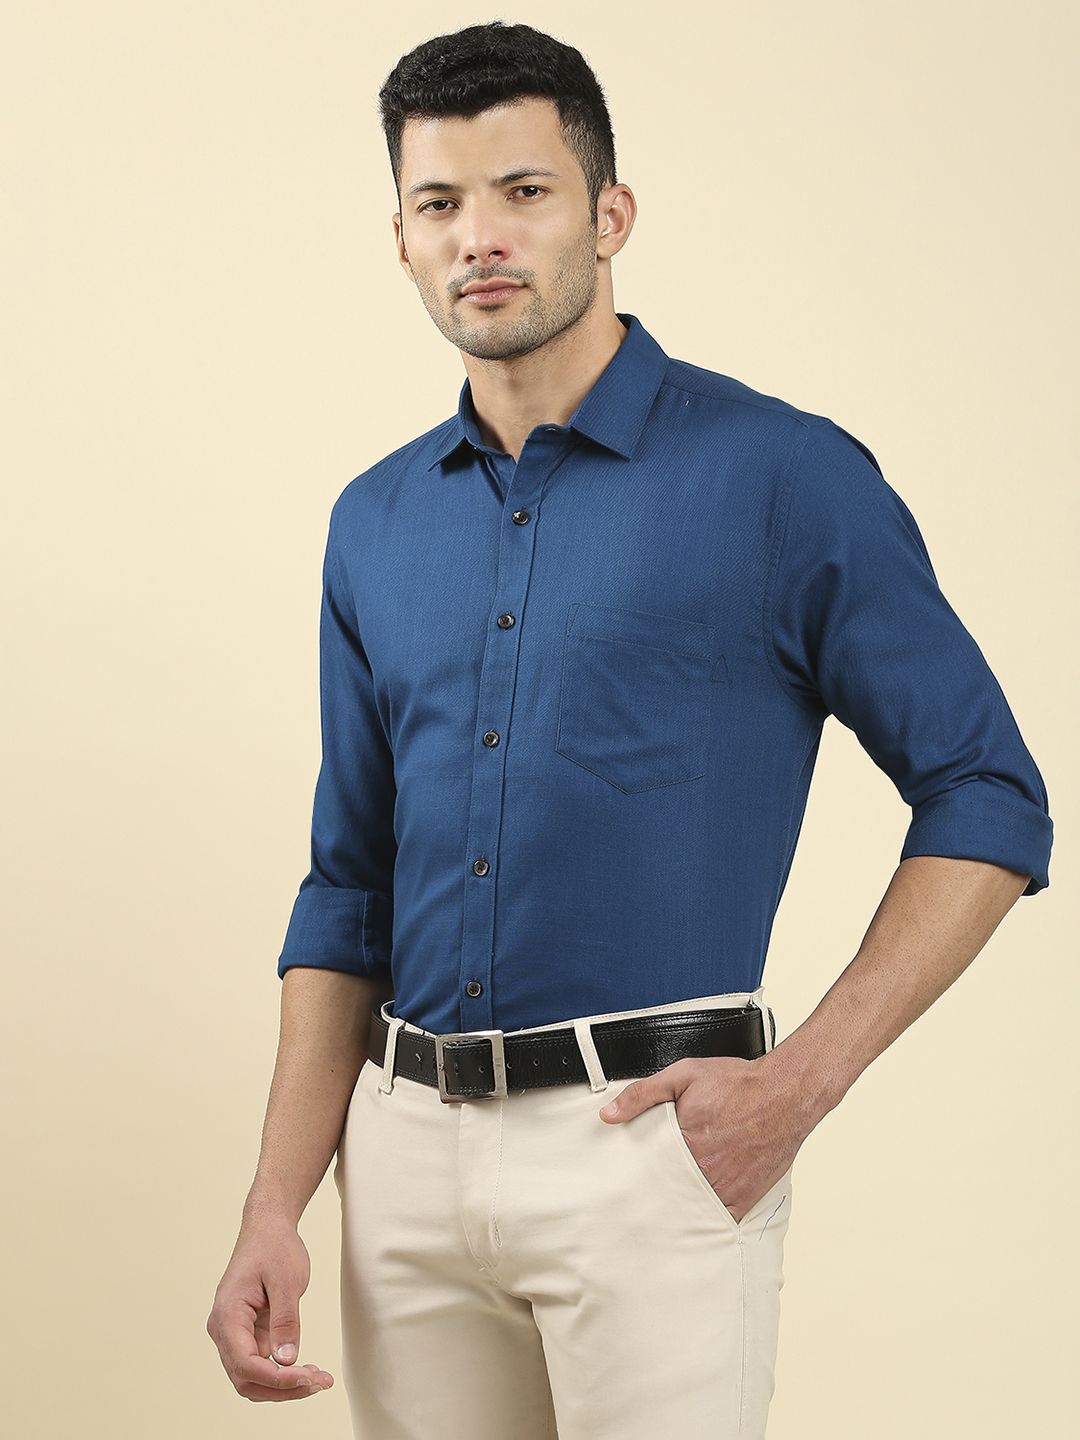 Buy Navy Blue Formal Shirt for Men Online in India